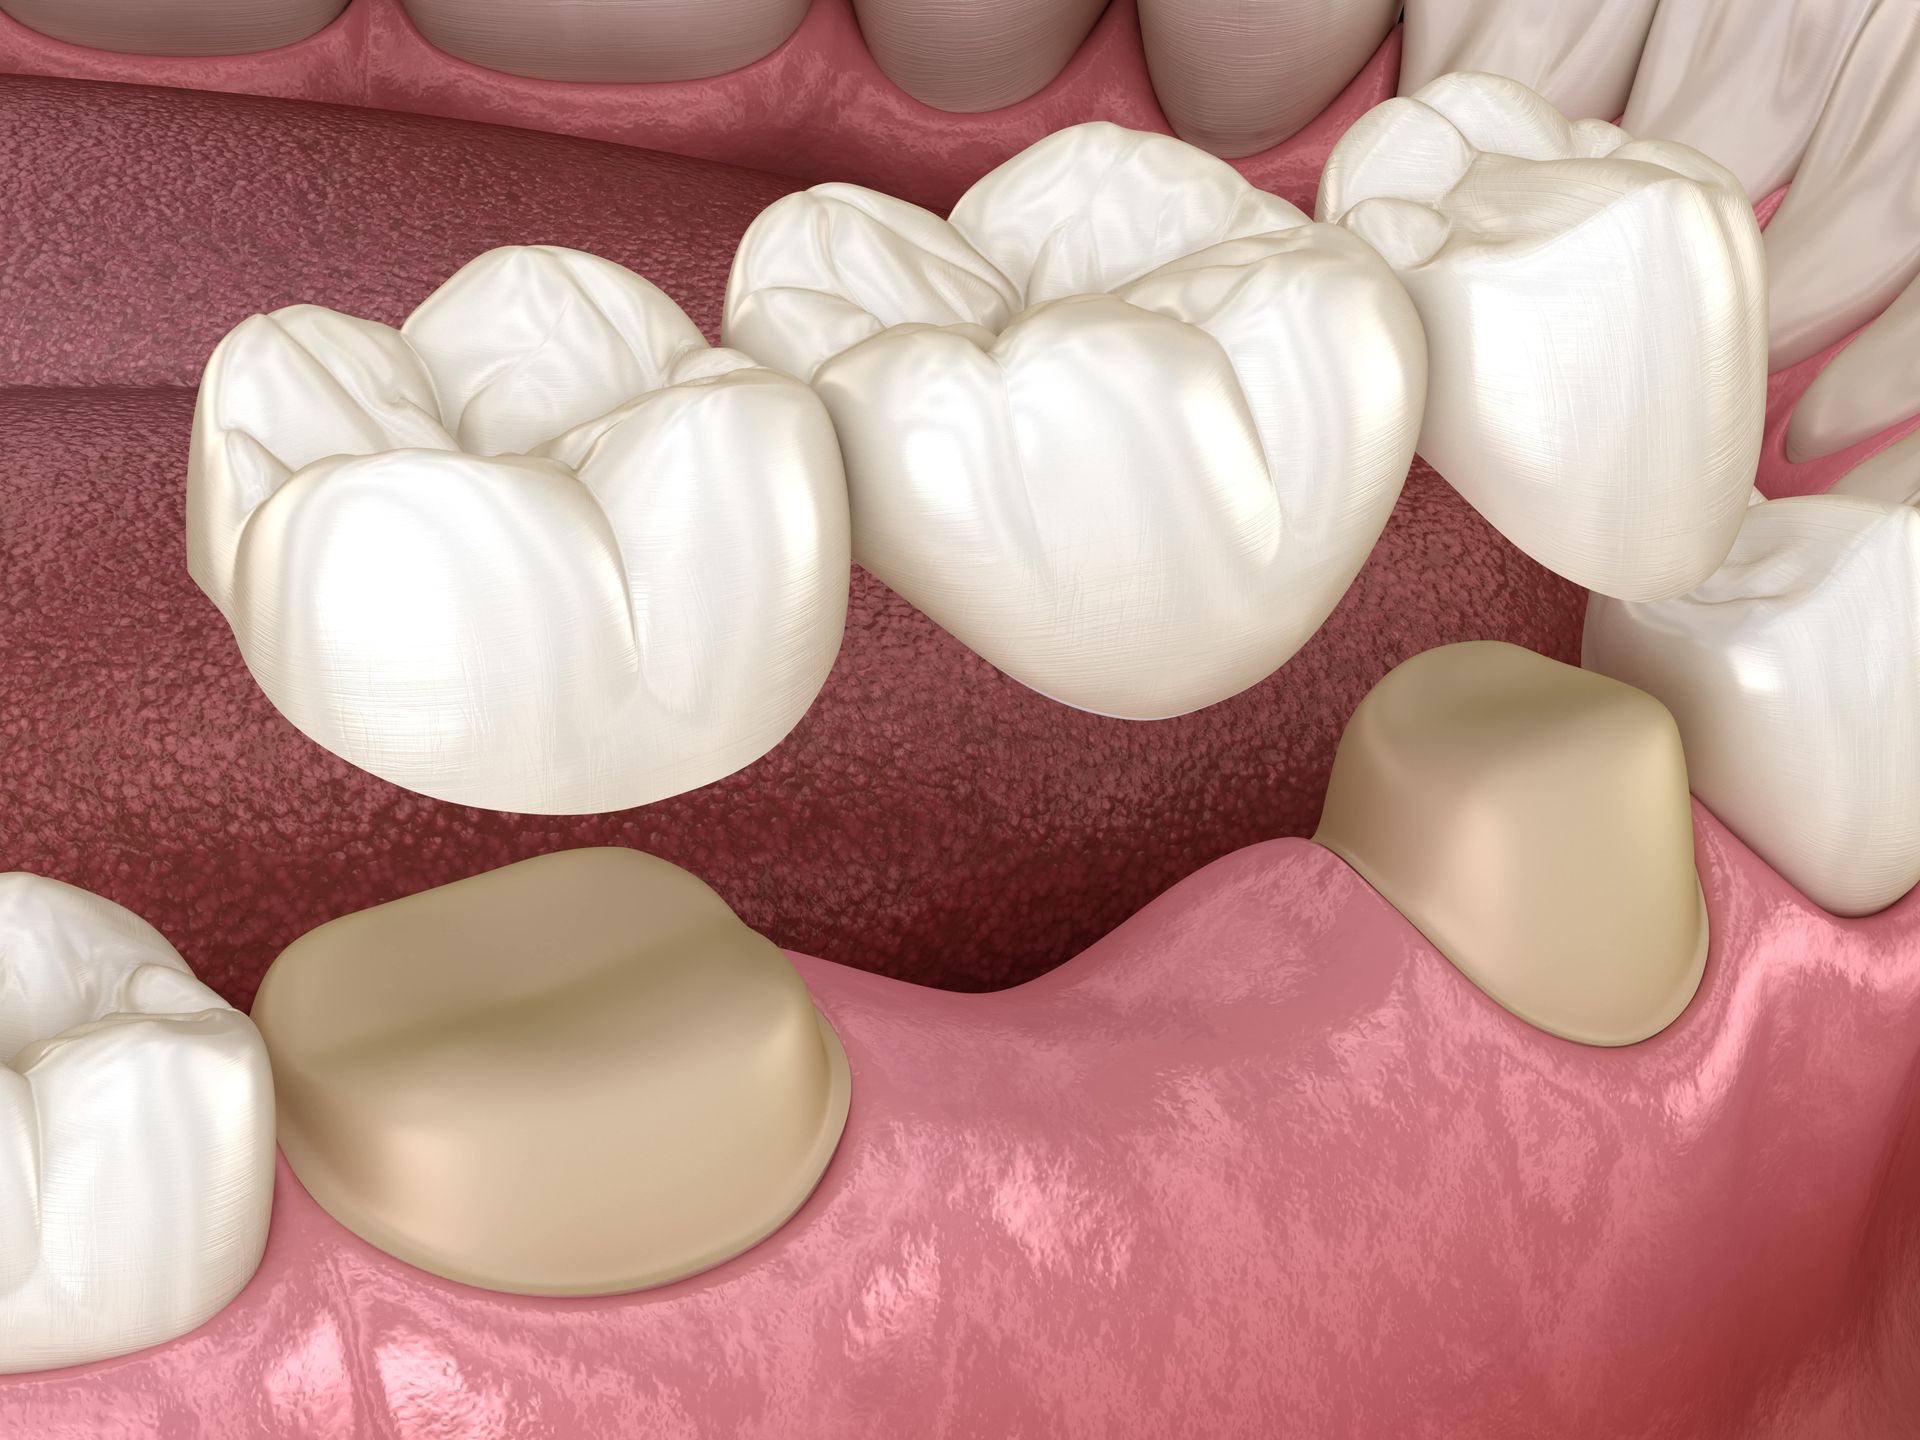 A computer generated image of a dental bridge replacing missing teeth